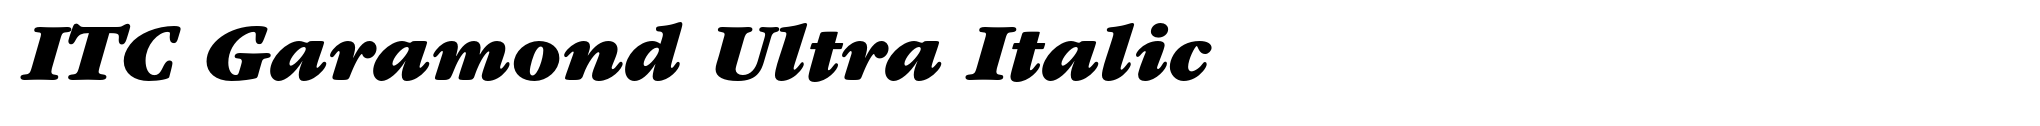 ITC Garamond Ultra Italic image